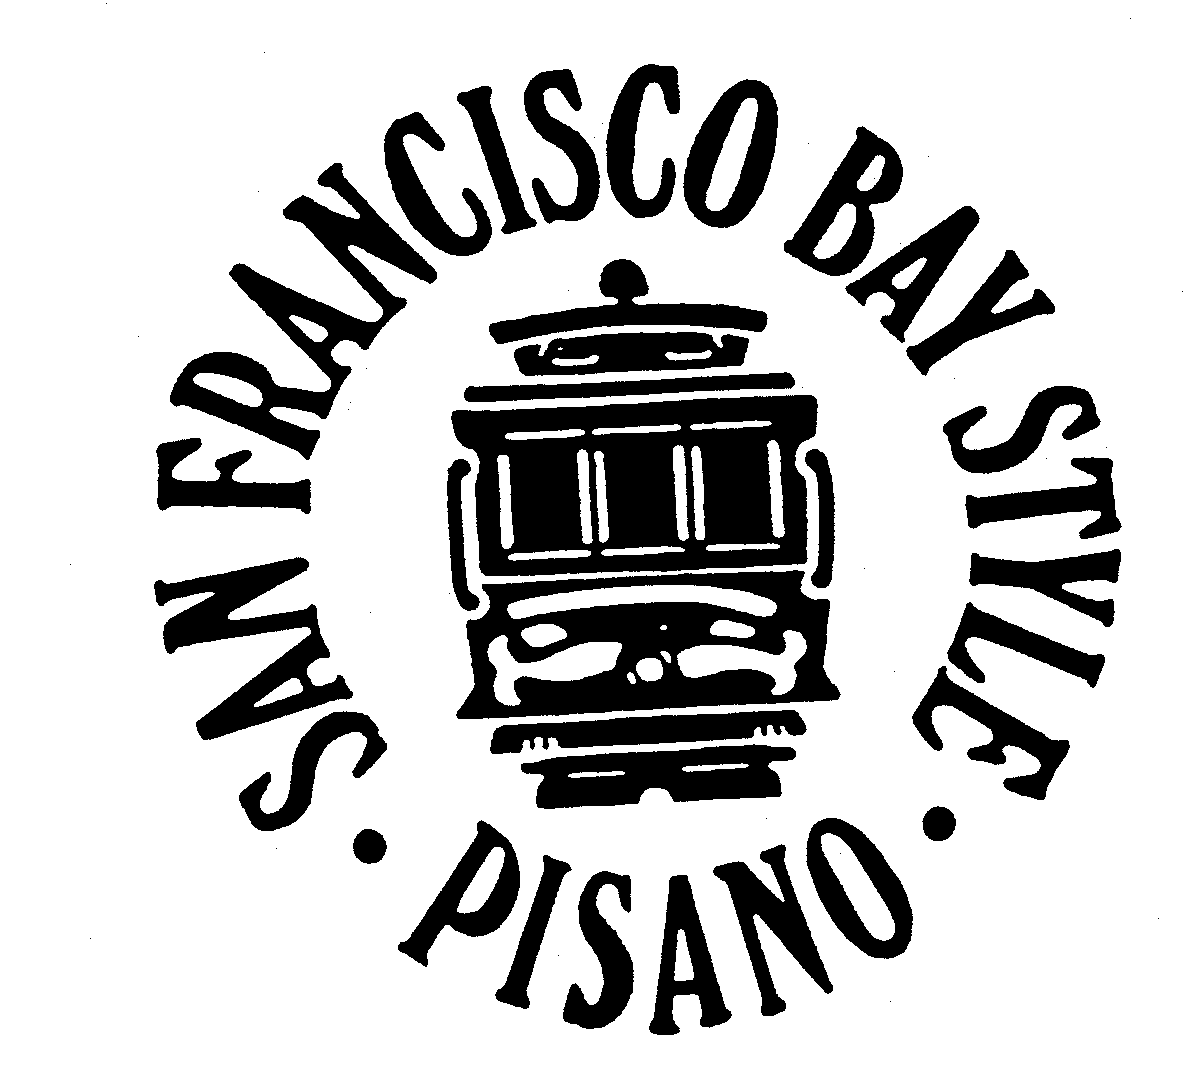  SAN FRANCISCO BAY STYLE PISANO